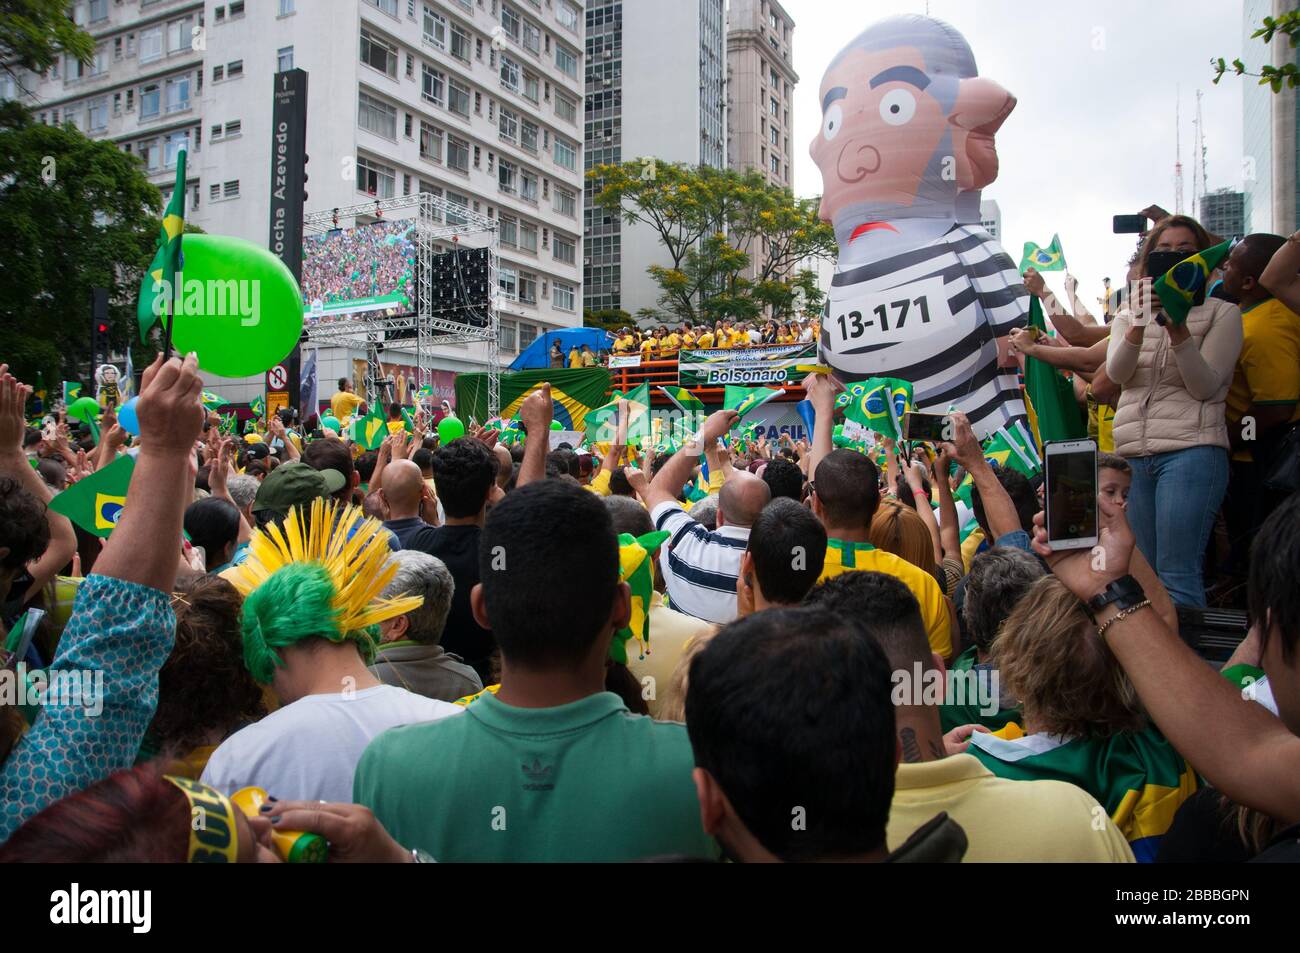 Sao Paulo, SP, Brazil, 2018/10/21, Demonstration pro presidential candidate Jair Bolsonaro on Paulista Avenue,next to sound truck an inflatable doll o Stock Photo